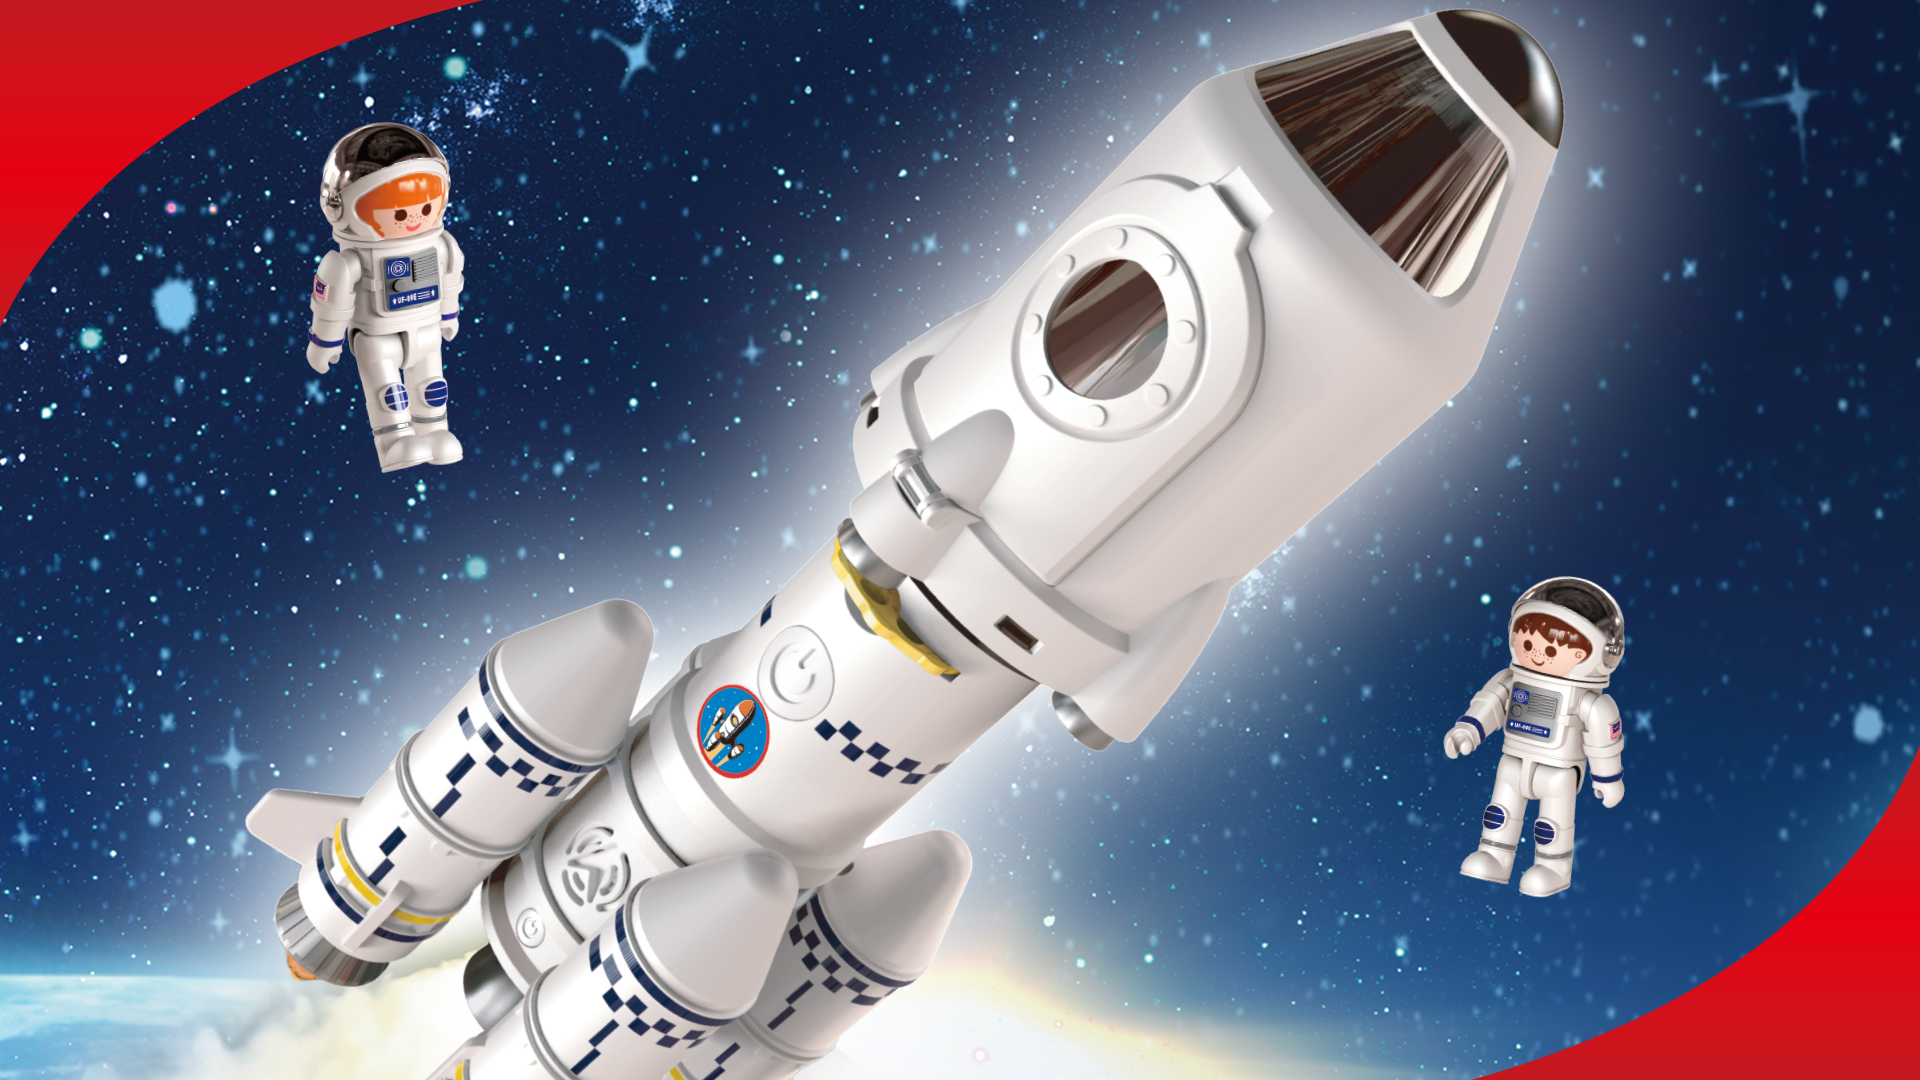 Space Astronaut - Videos - LEGO.com for kids